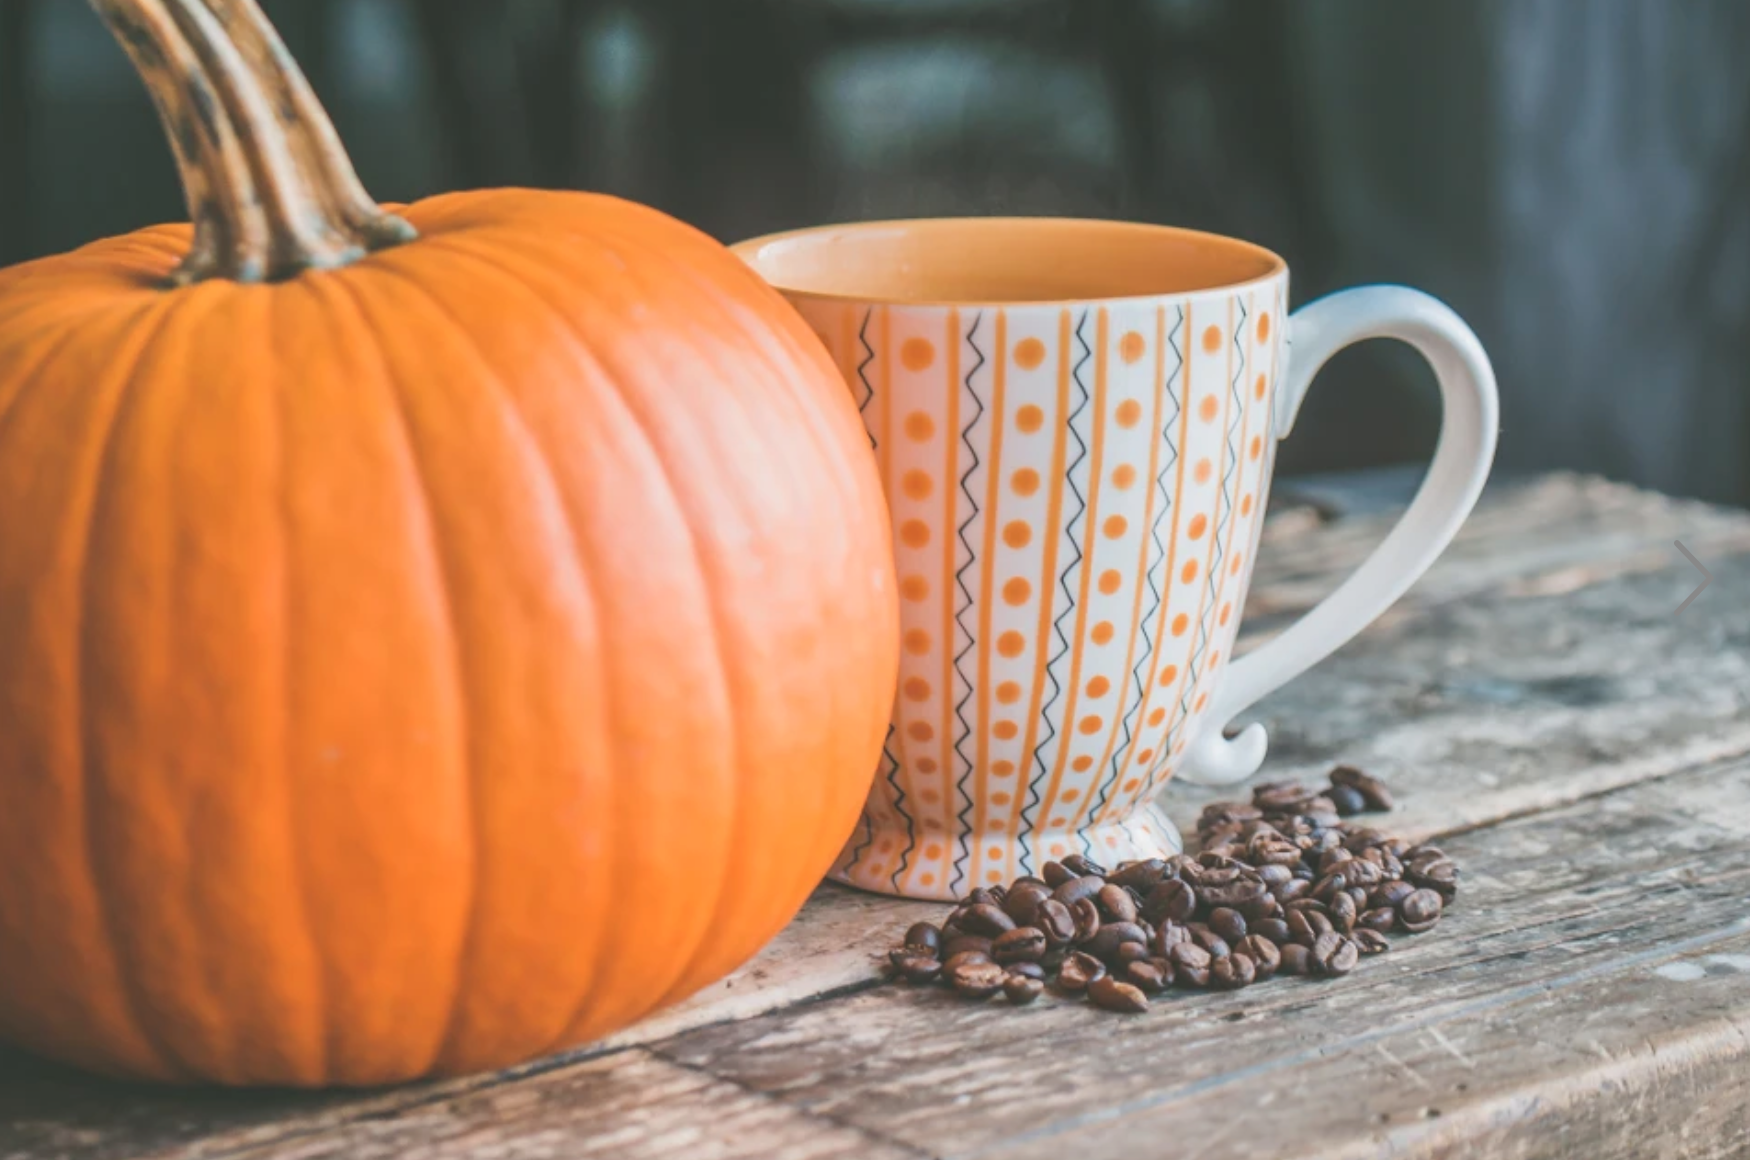 Pumpkin and coffee mug